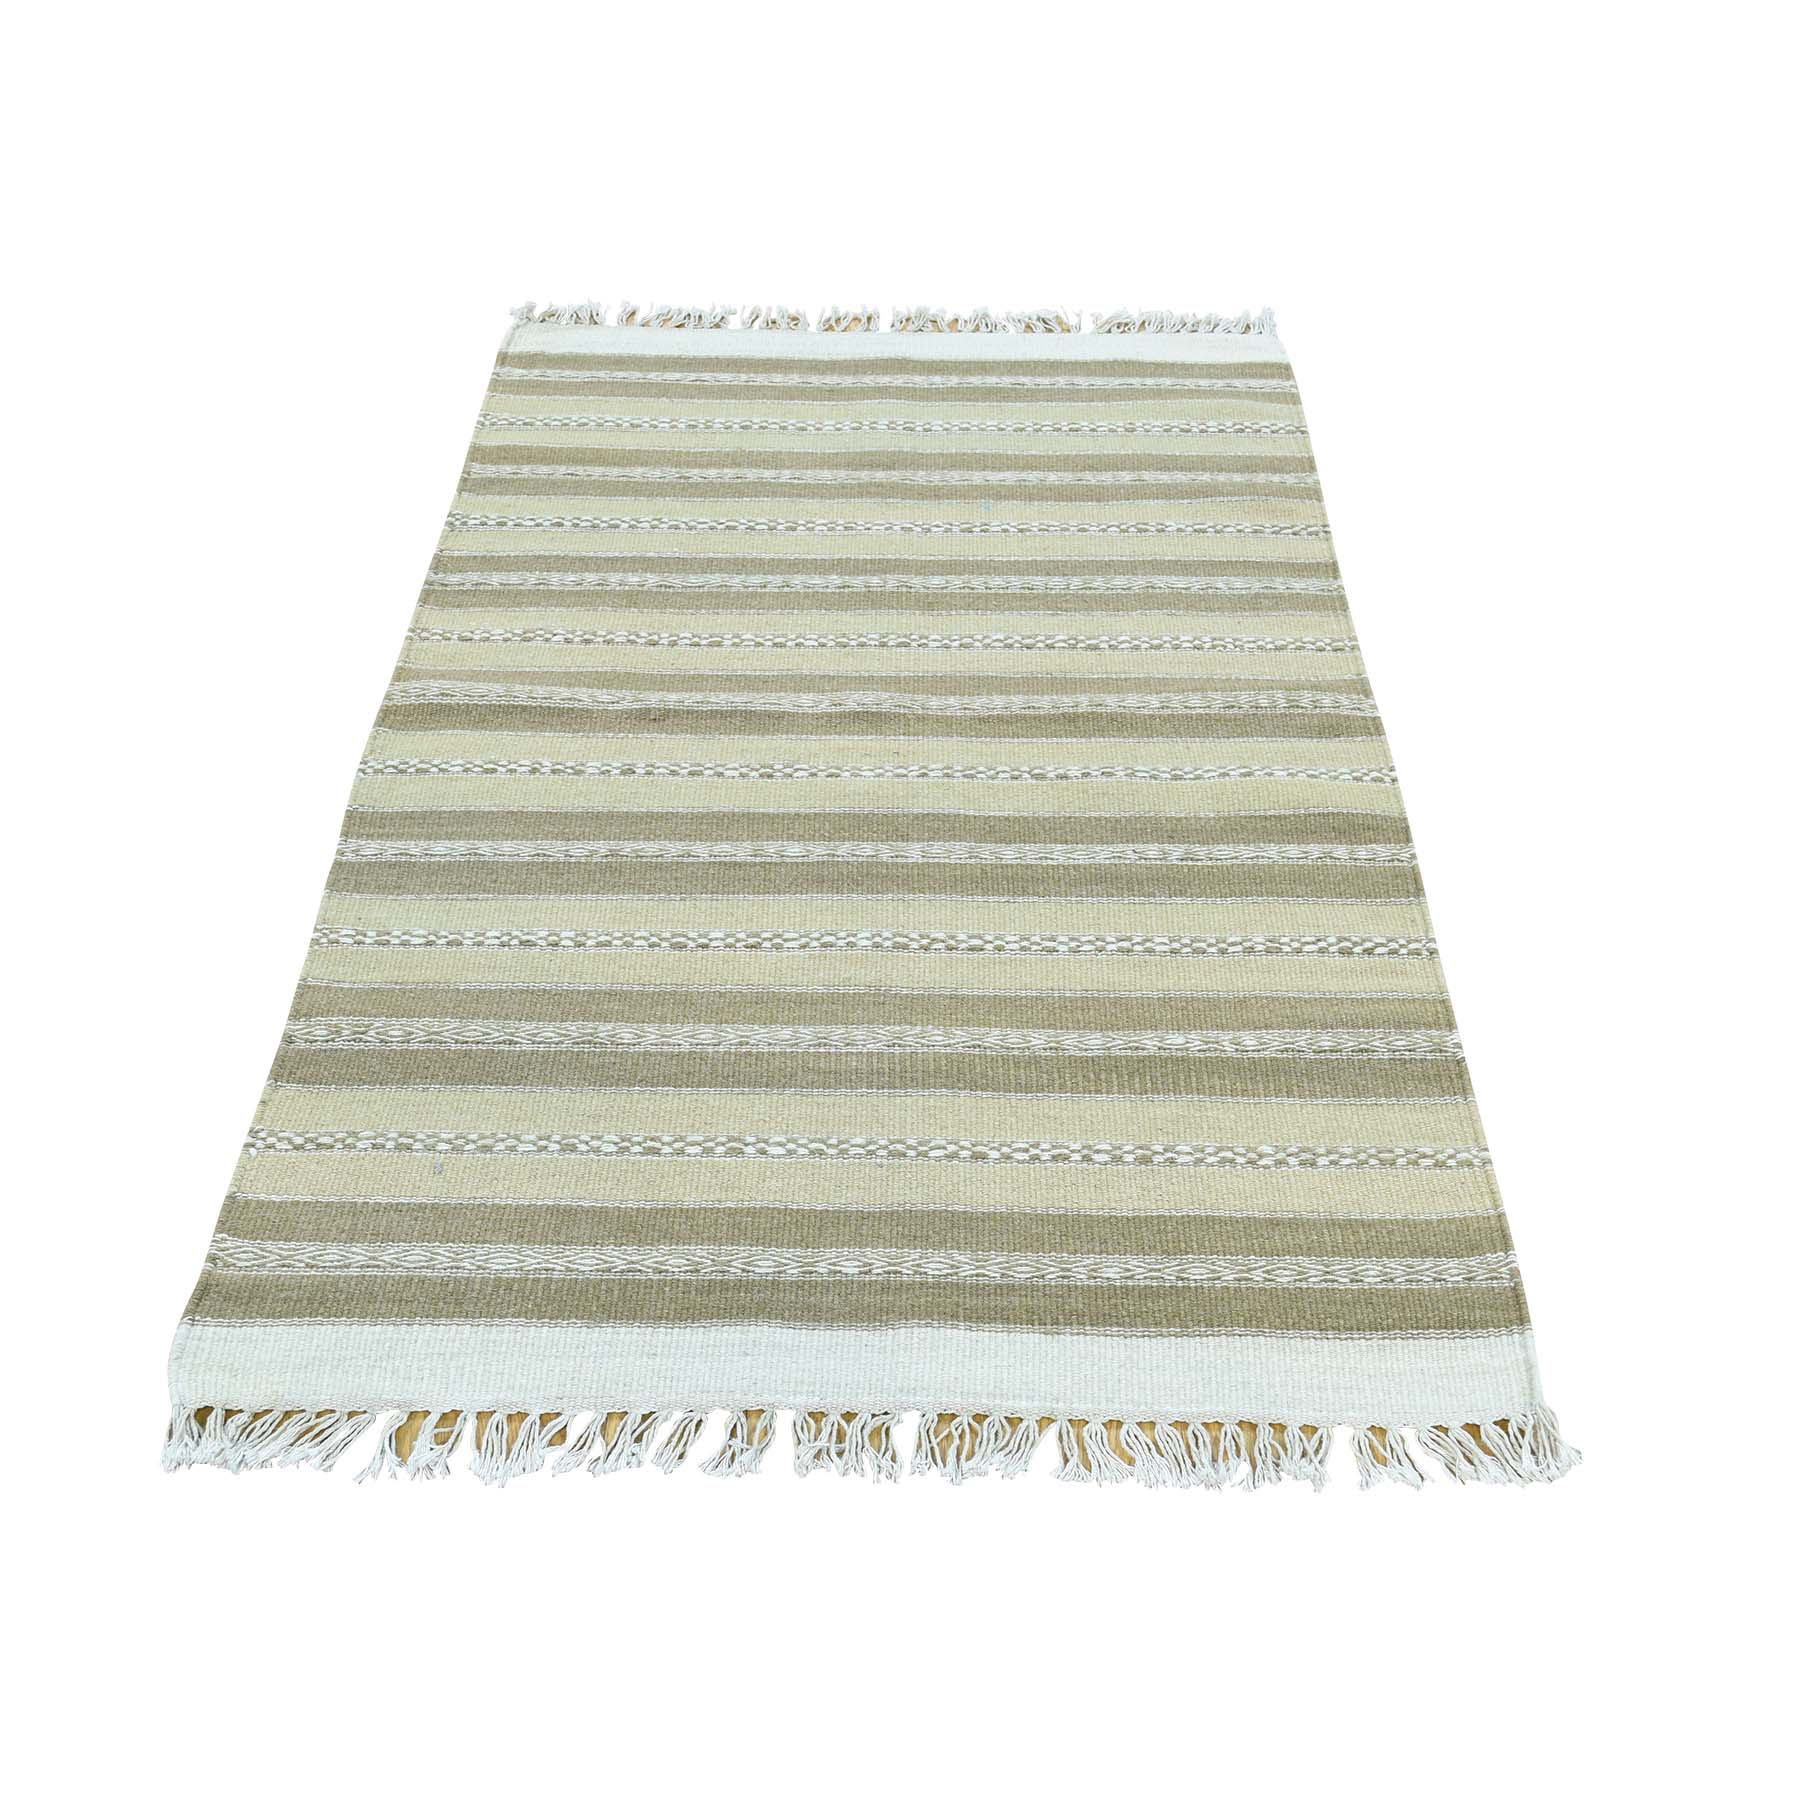 2'9"X4'10" Hand-Woven Durie Kilim Pure Wool Flat Weave Striped Rug moaca8db